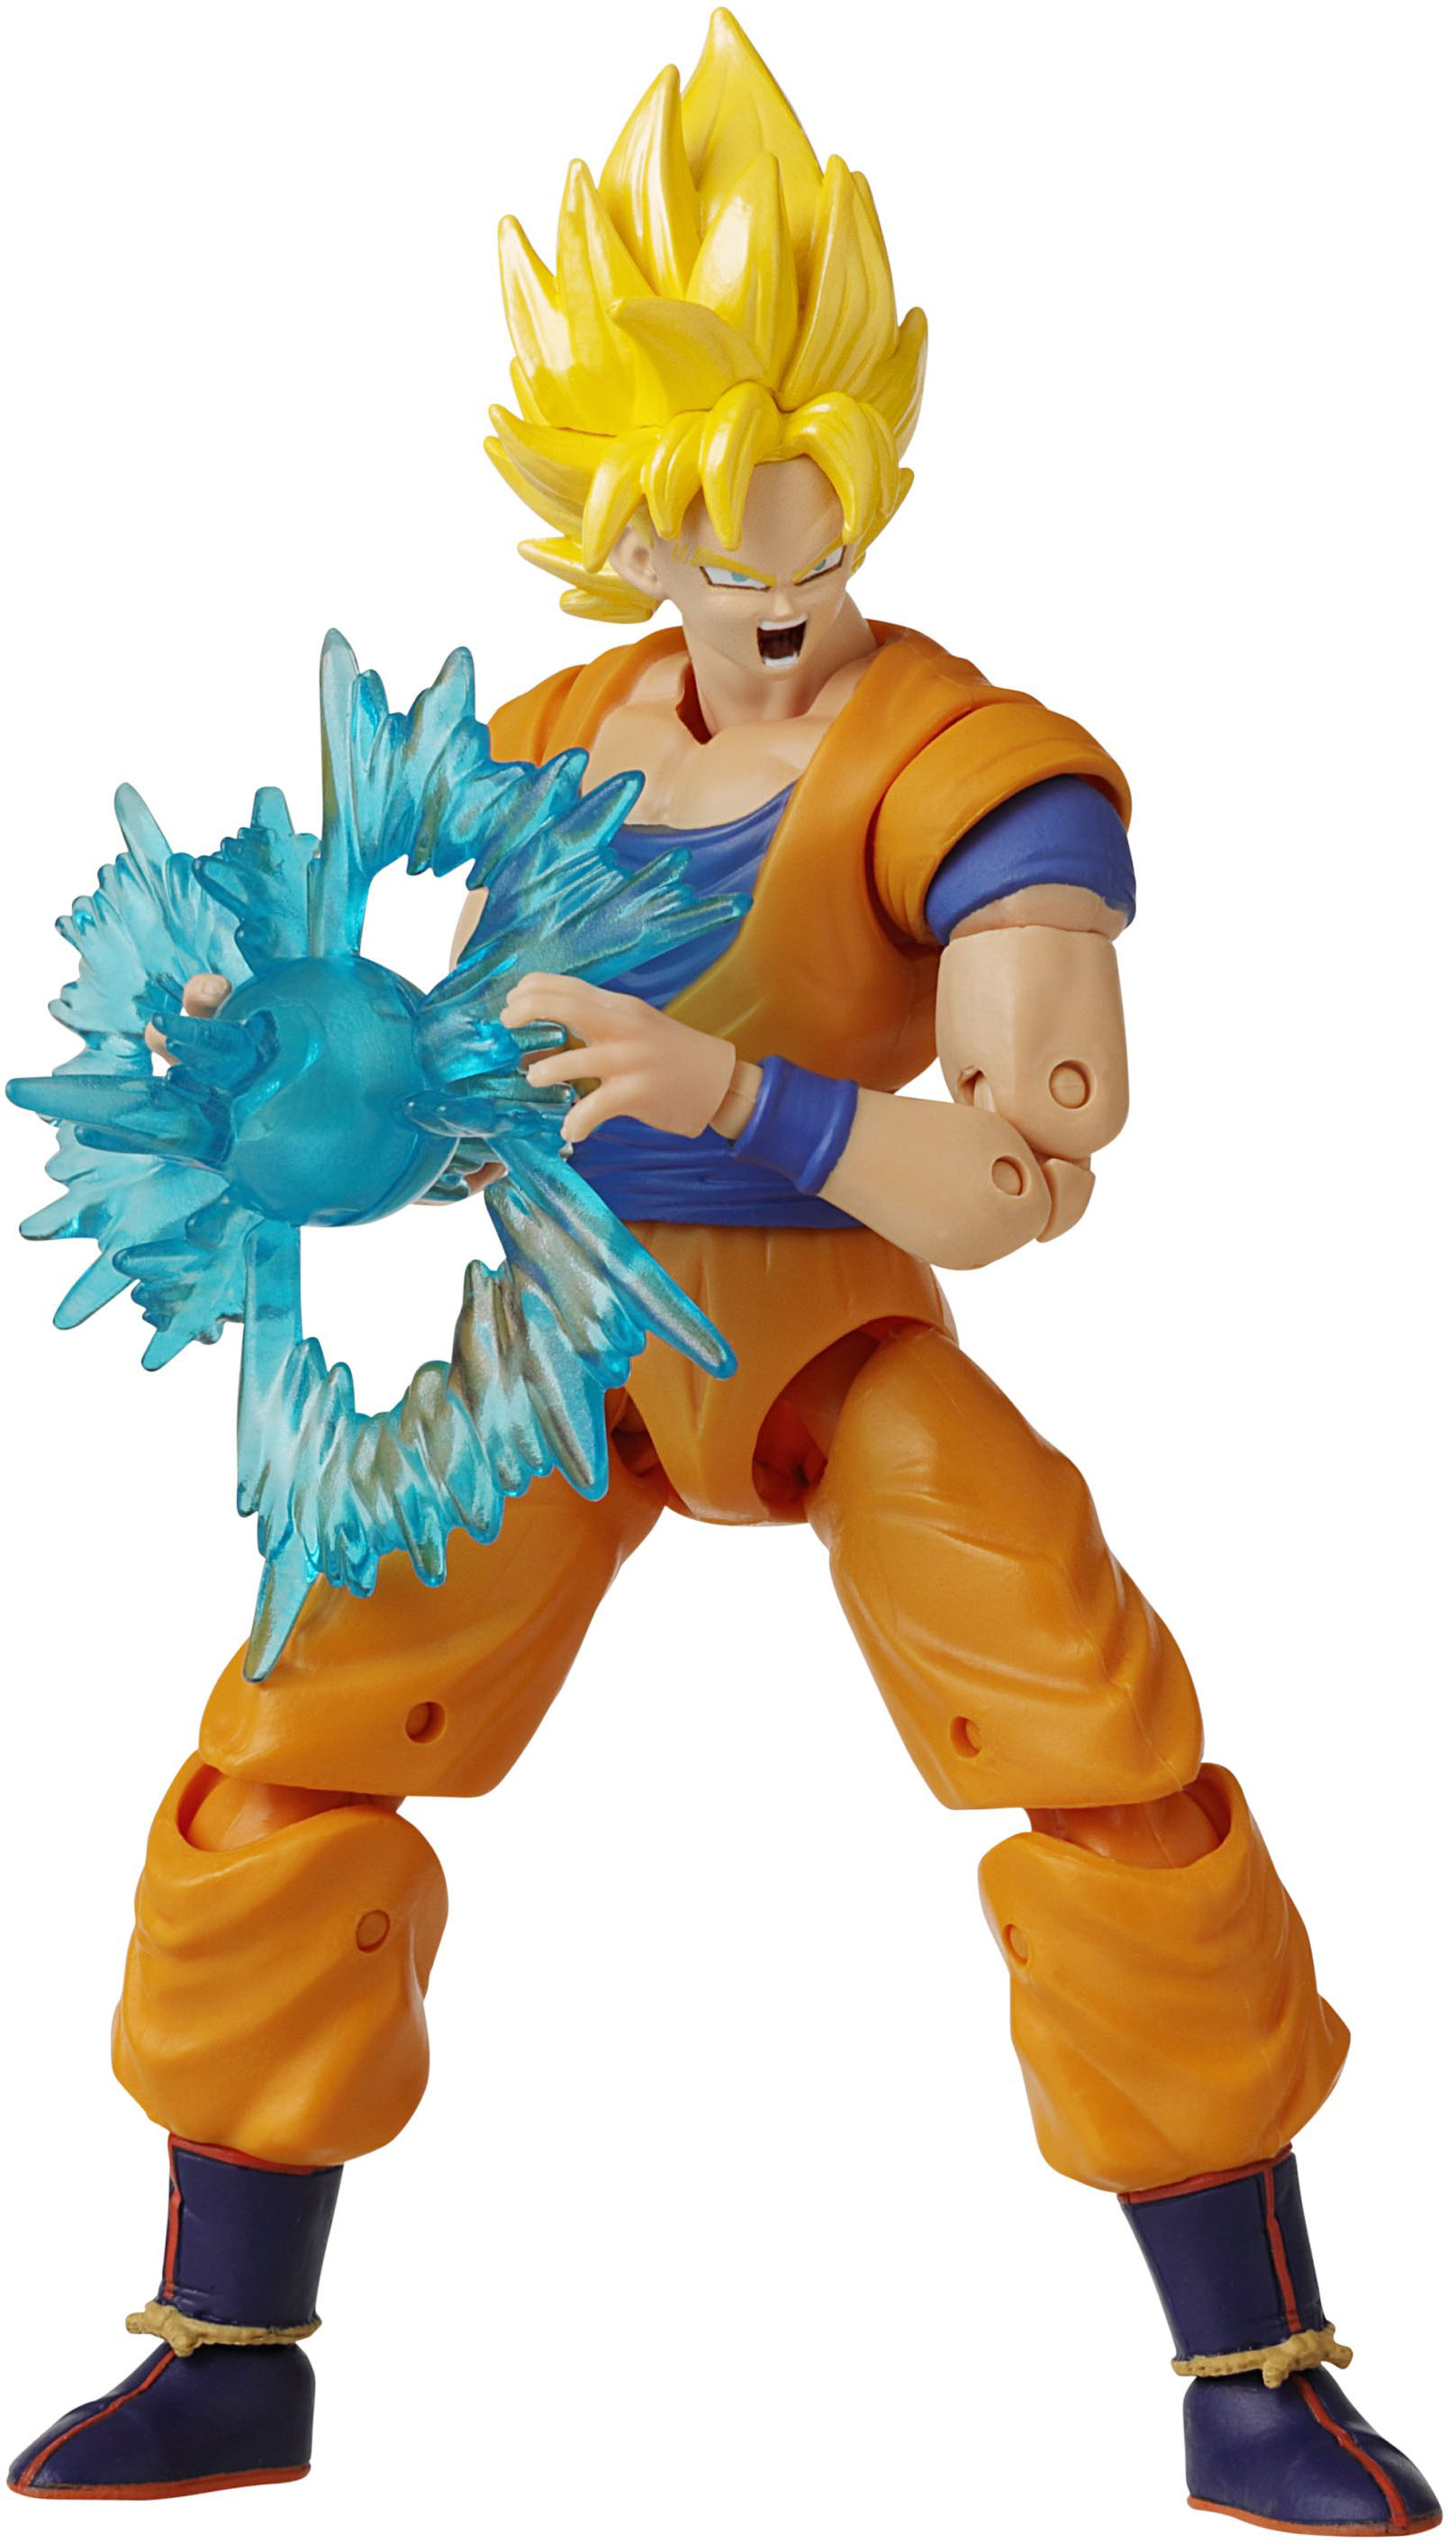 Super Saiyan Goku, Dragon Star Action Figure